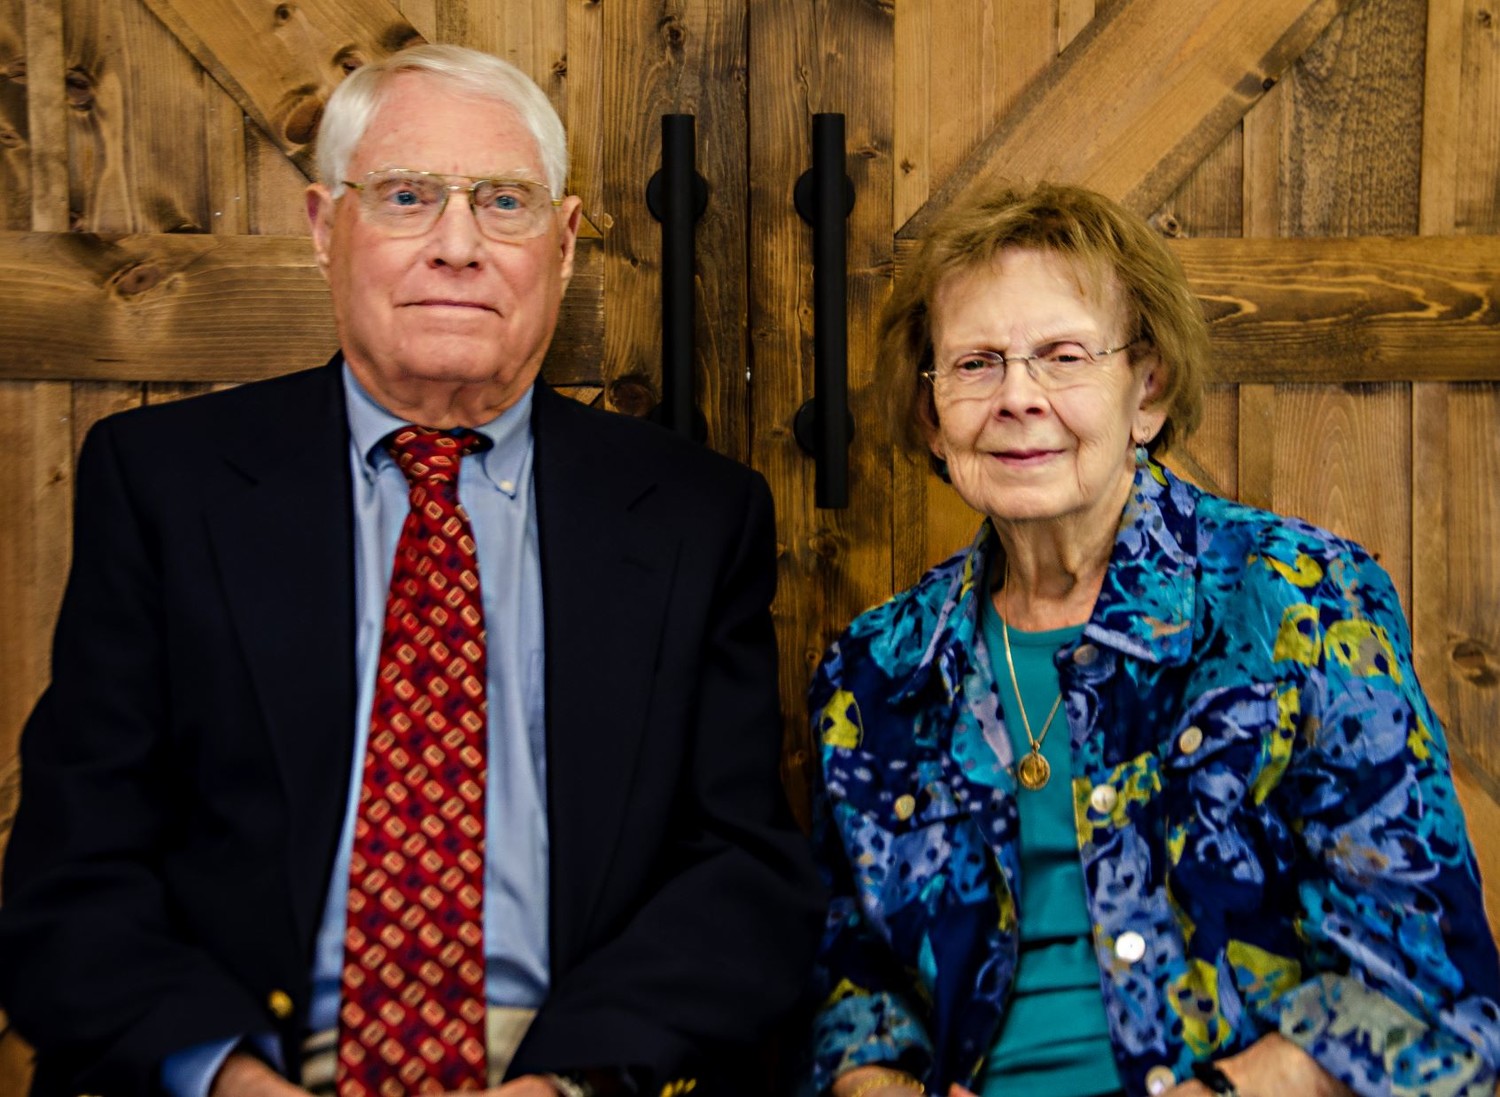 Mr. and Mrs. James R. Garrett of Crawfordsville celebrated their 70th wedding anniversary on June 19.